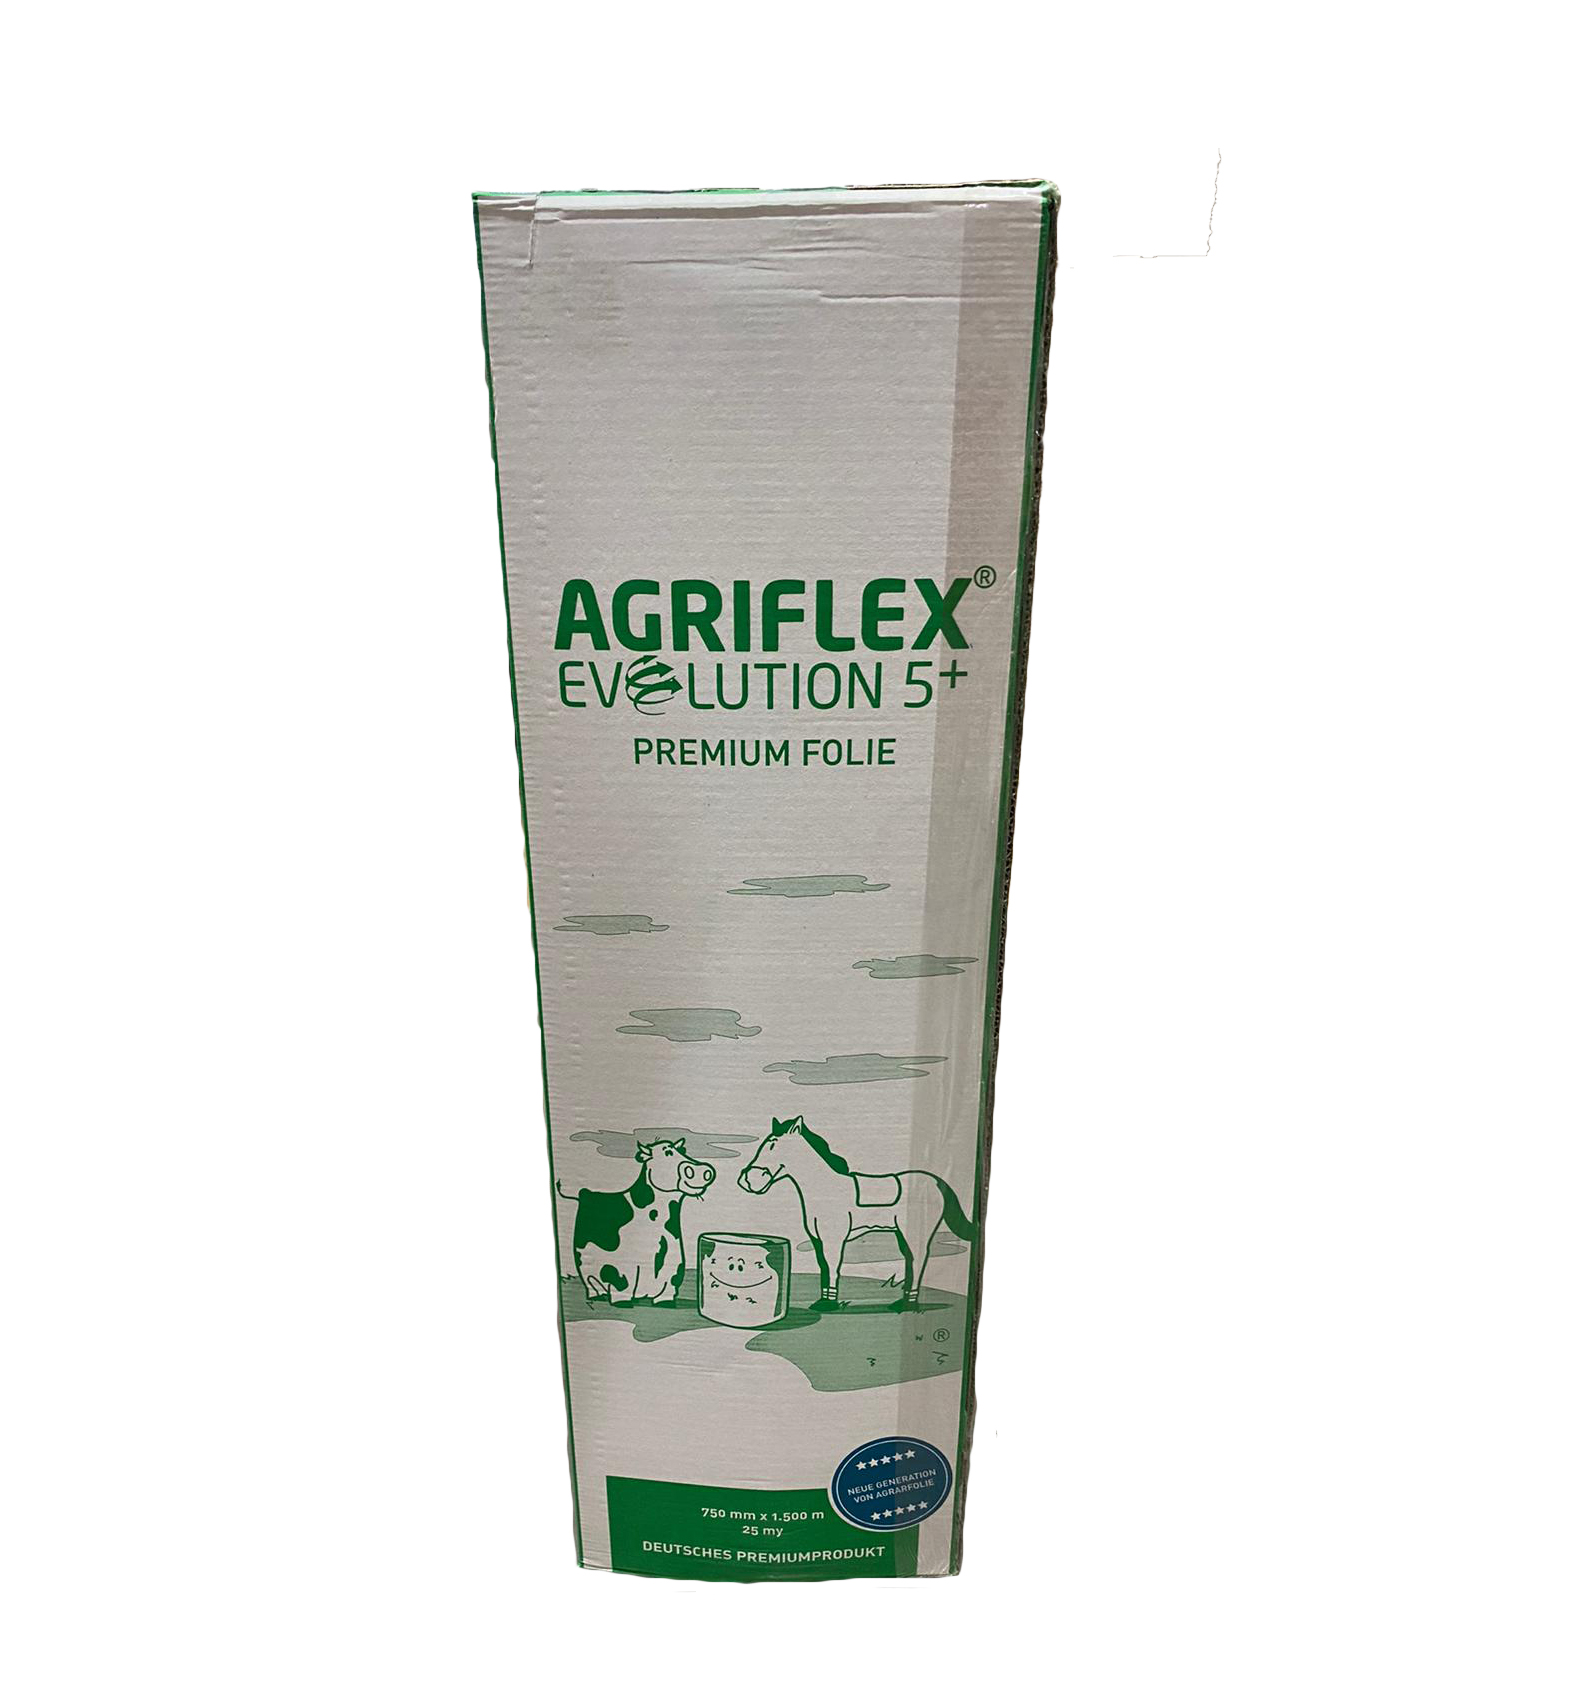 Agrarstretchfolie "AgriFlex Evolution 5+" 750mm x 1500m, grün